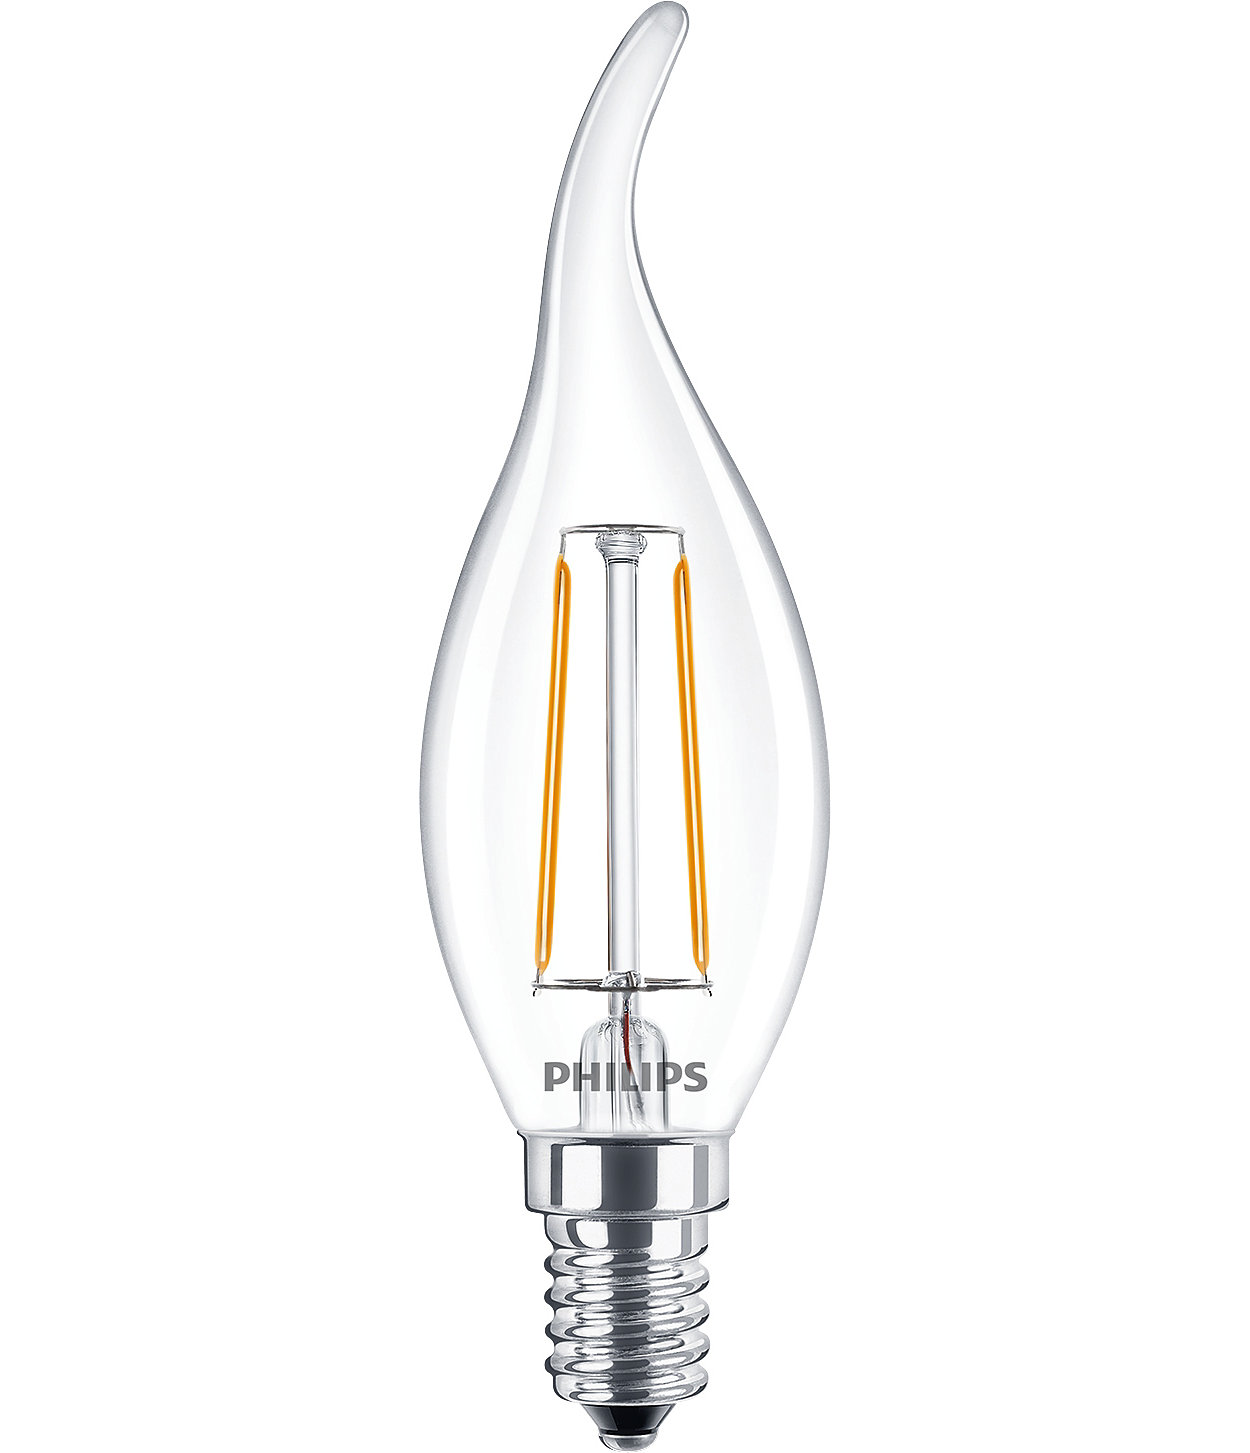 Classic LEDbulbs lamps for decorative lighting